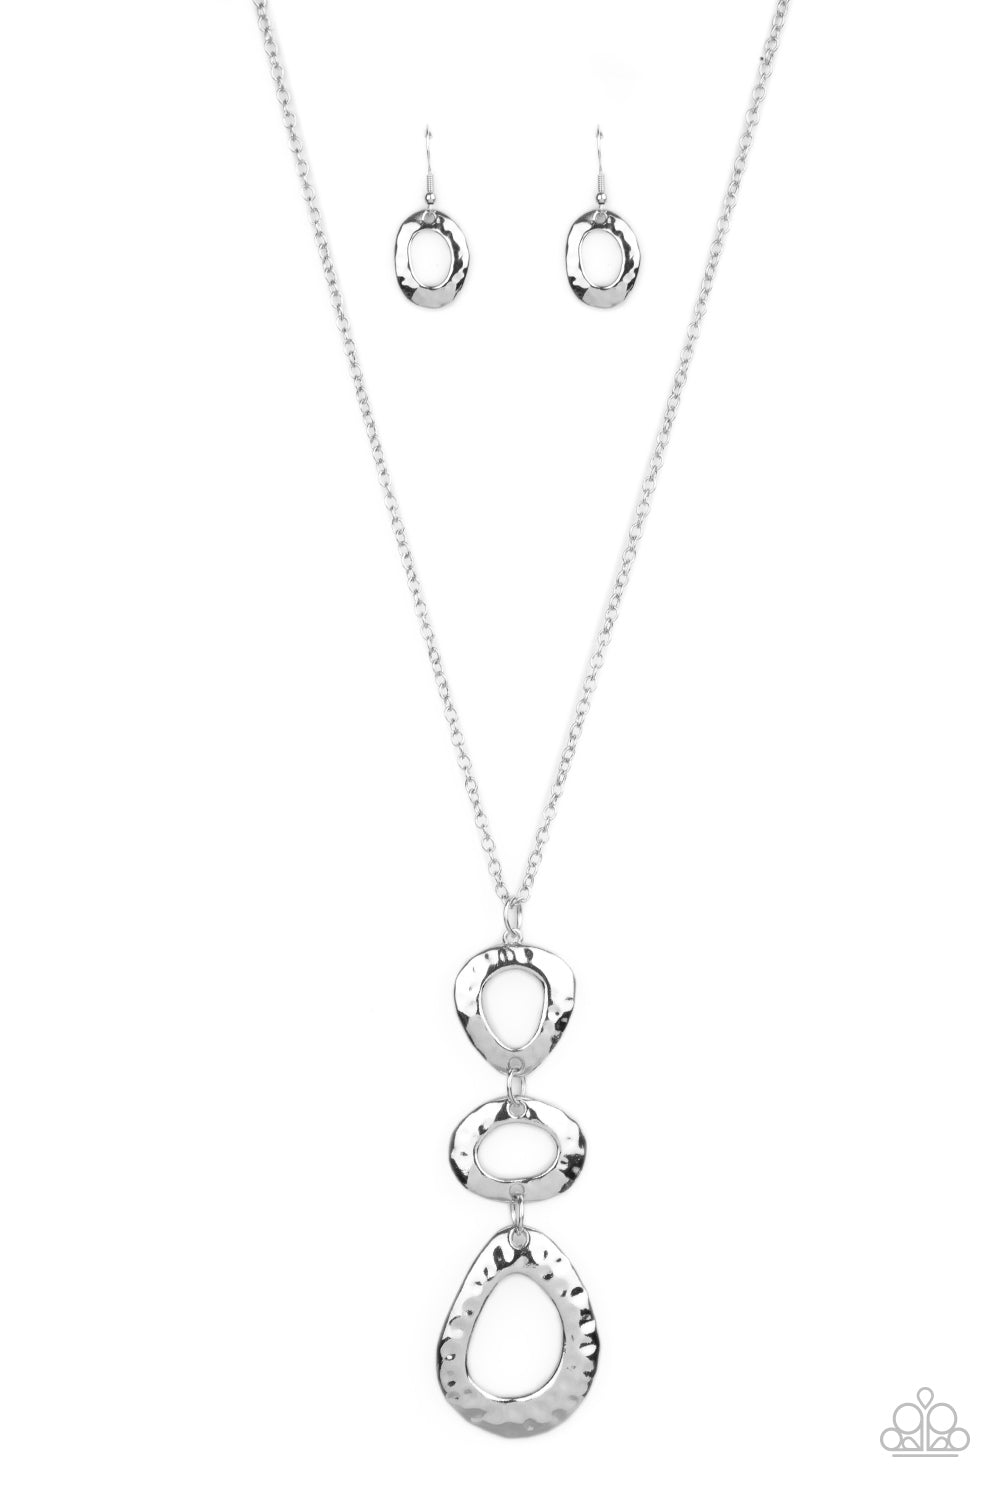 Gallery Artisan - Silver necklace 2134